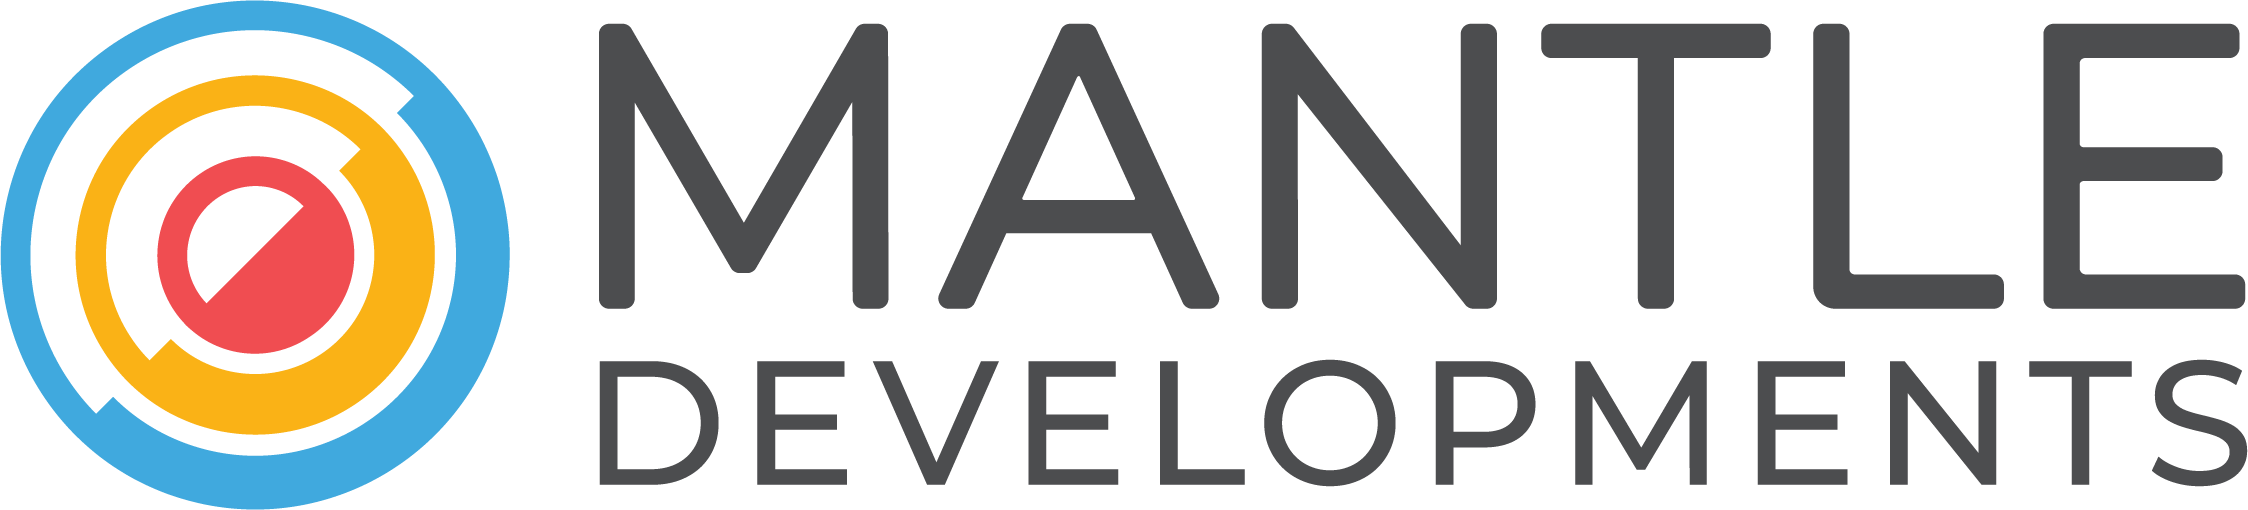 MantleDevelopments-Logo